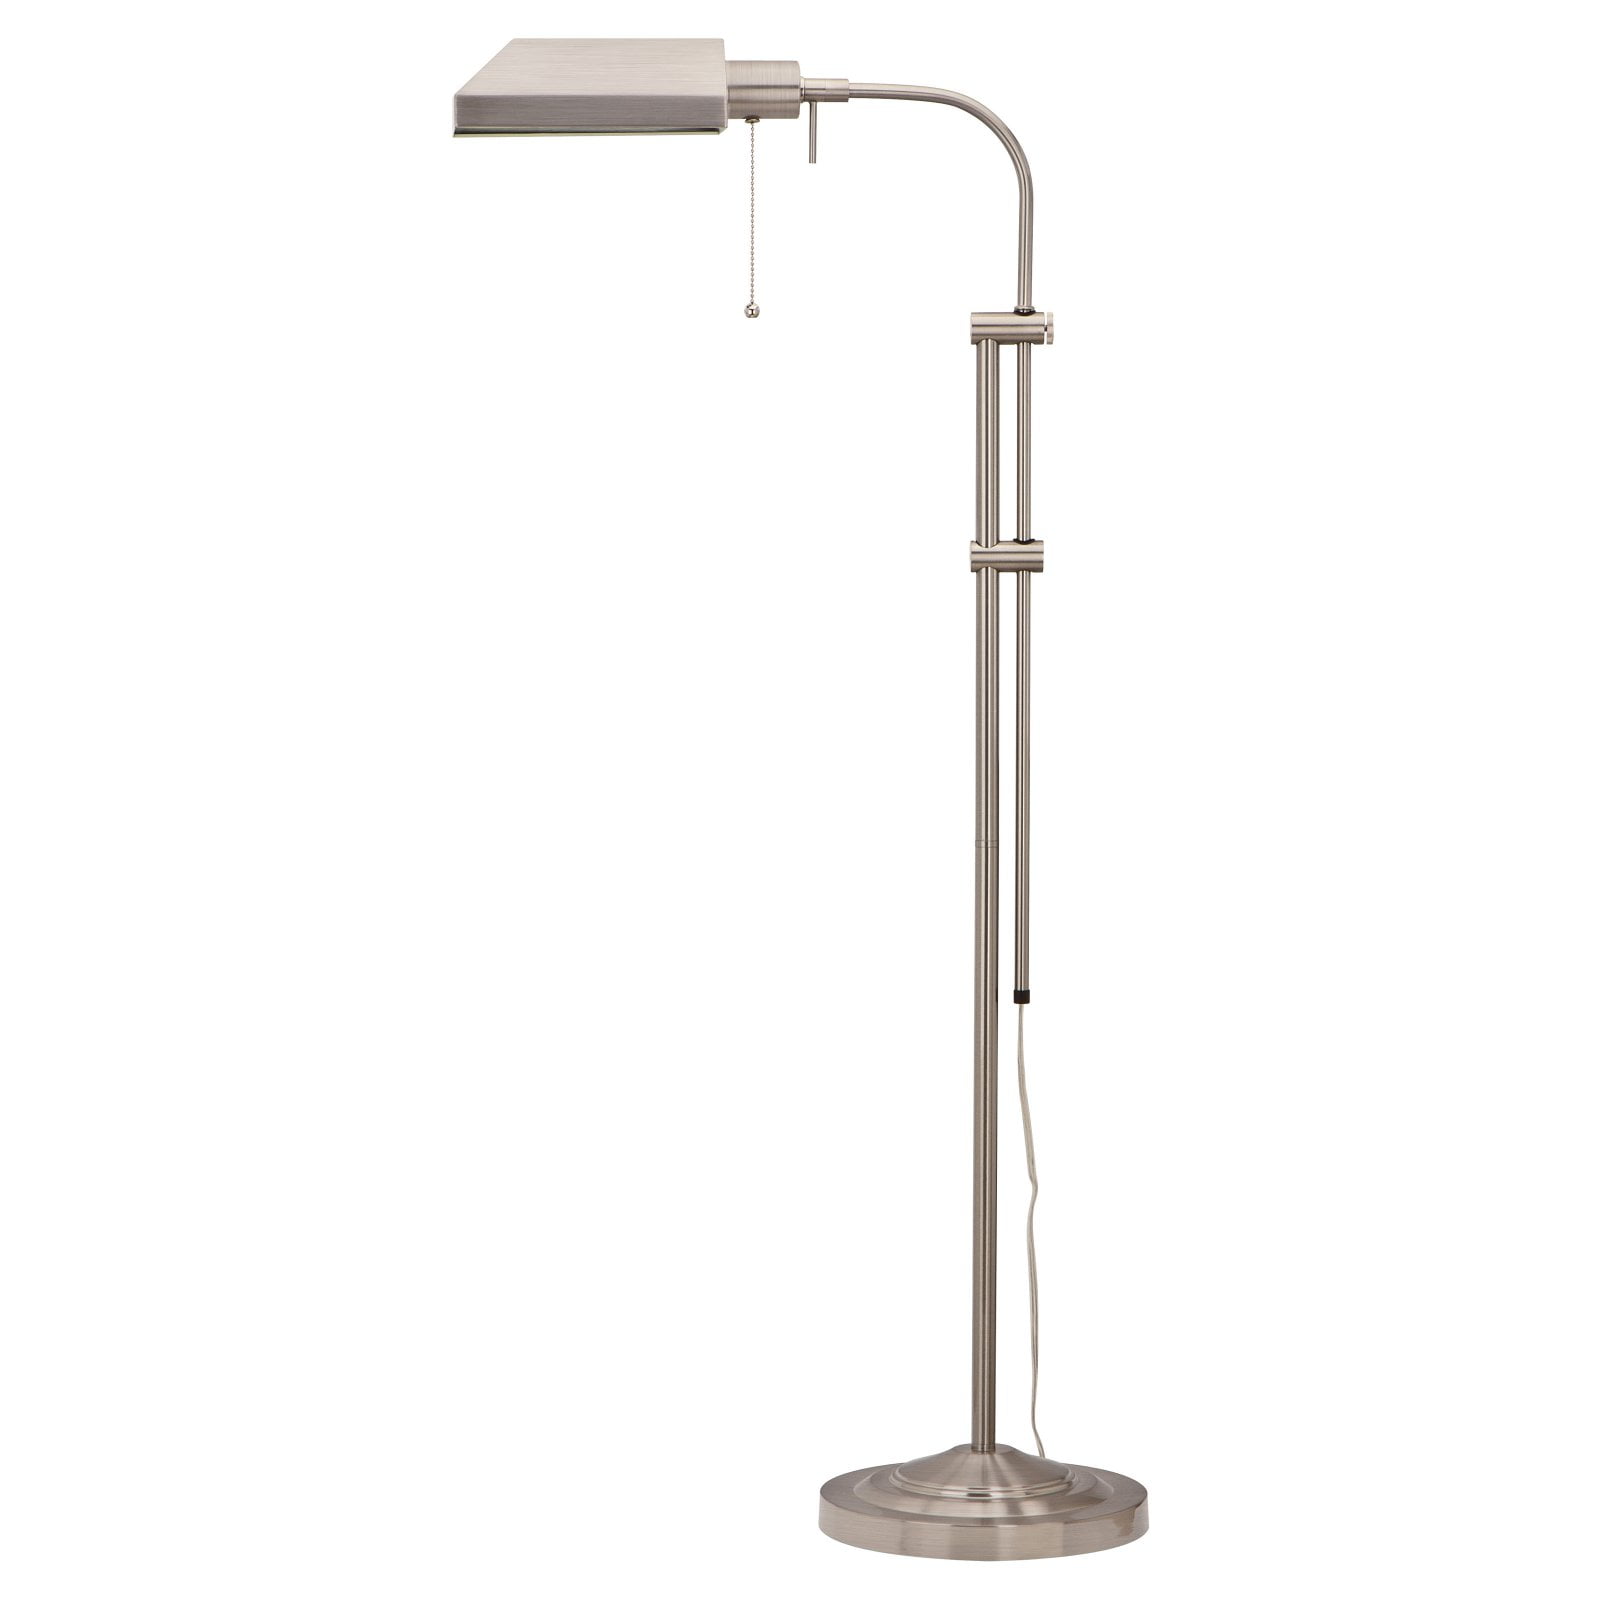 Cal Lighting Dark Bronze Metal Pharmacy Floor Lamp With Adjustable Pole and Swivel Head for sale online 